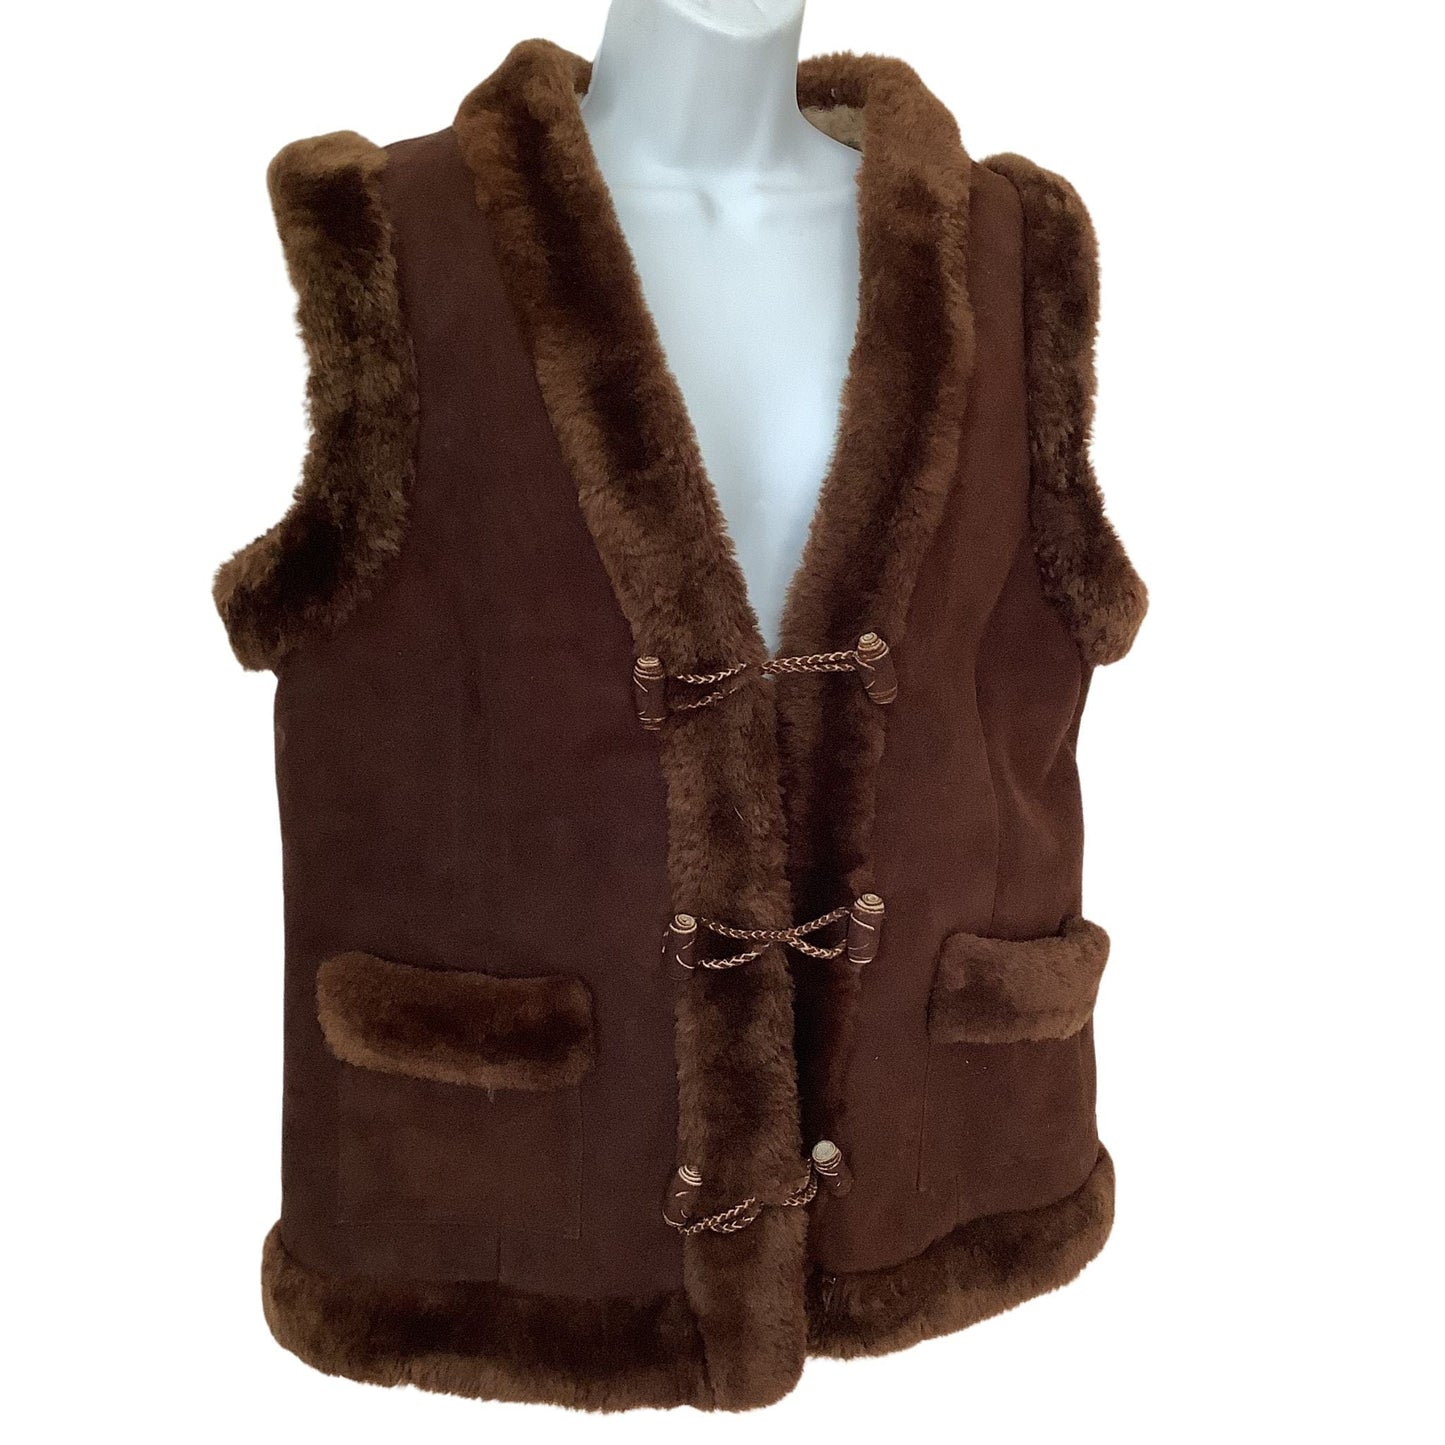 Sheepskin Wool Vest Medium / Brown / Classic